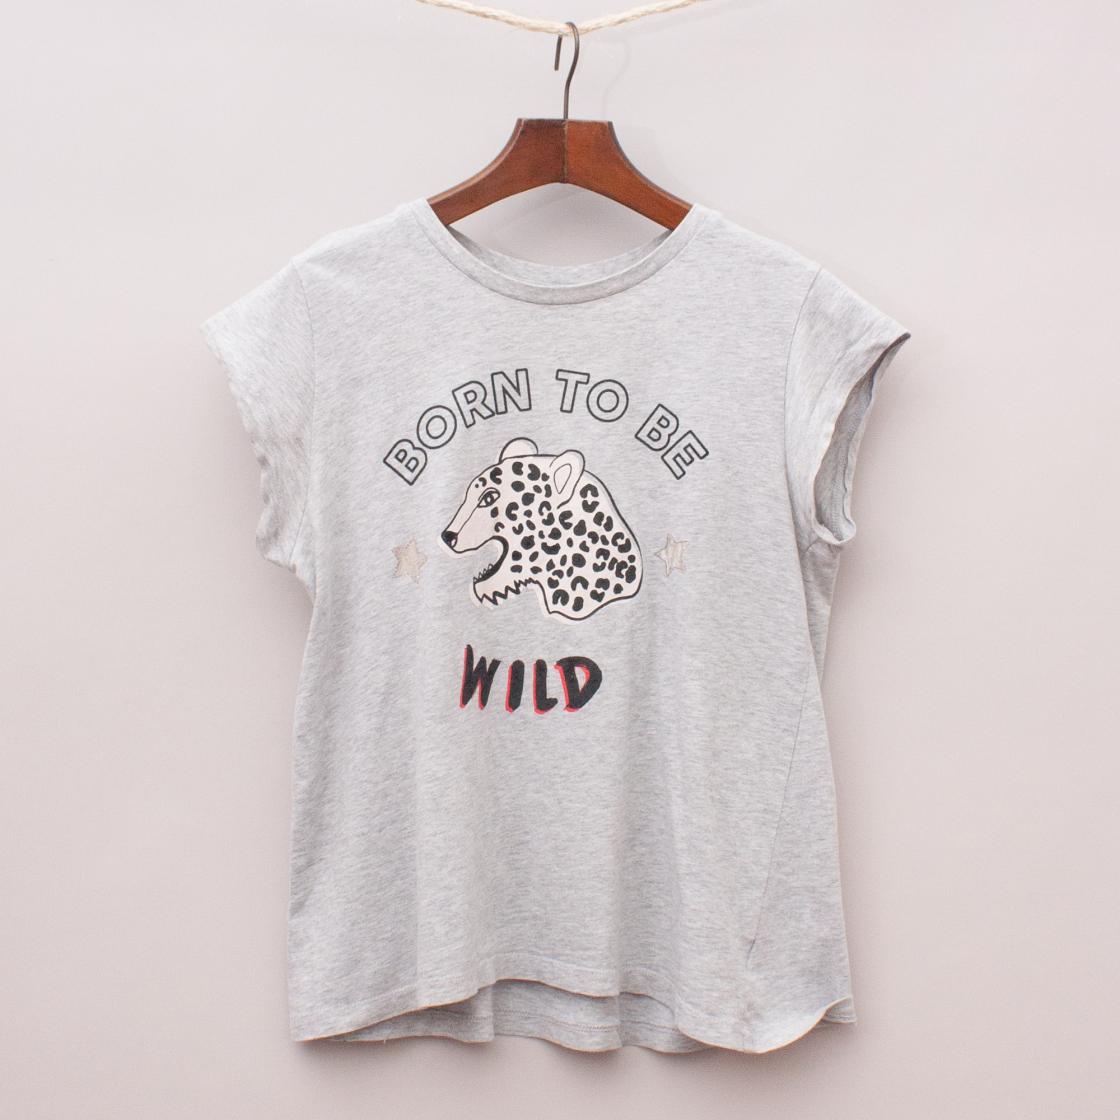 Seed "Wild" T-Shirt